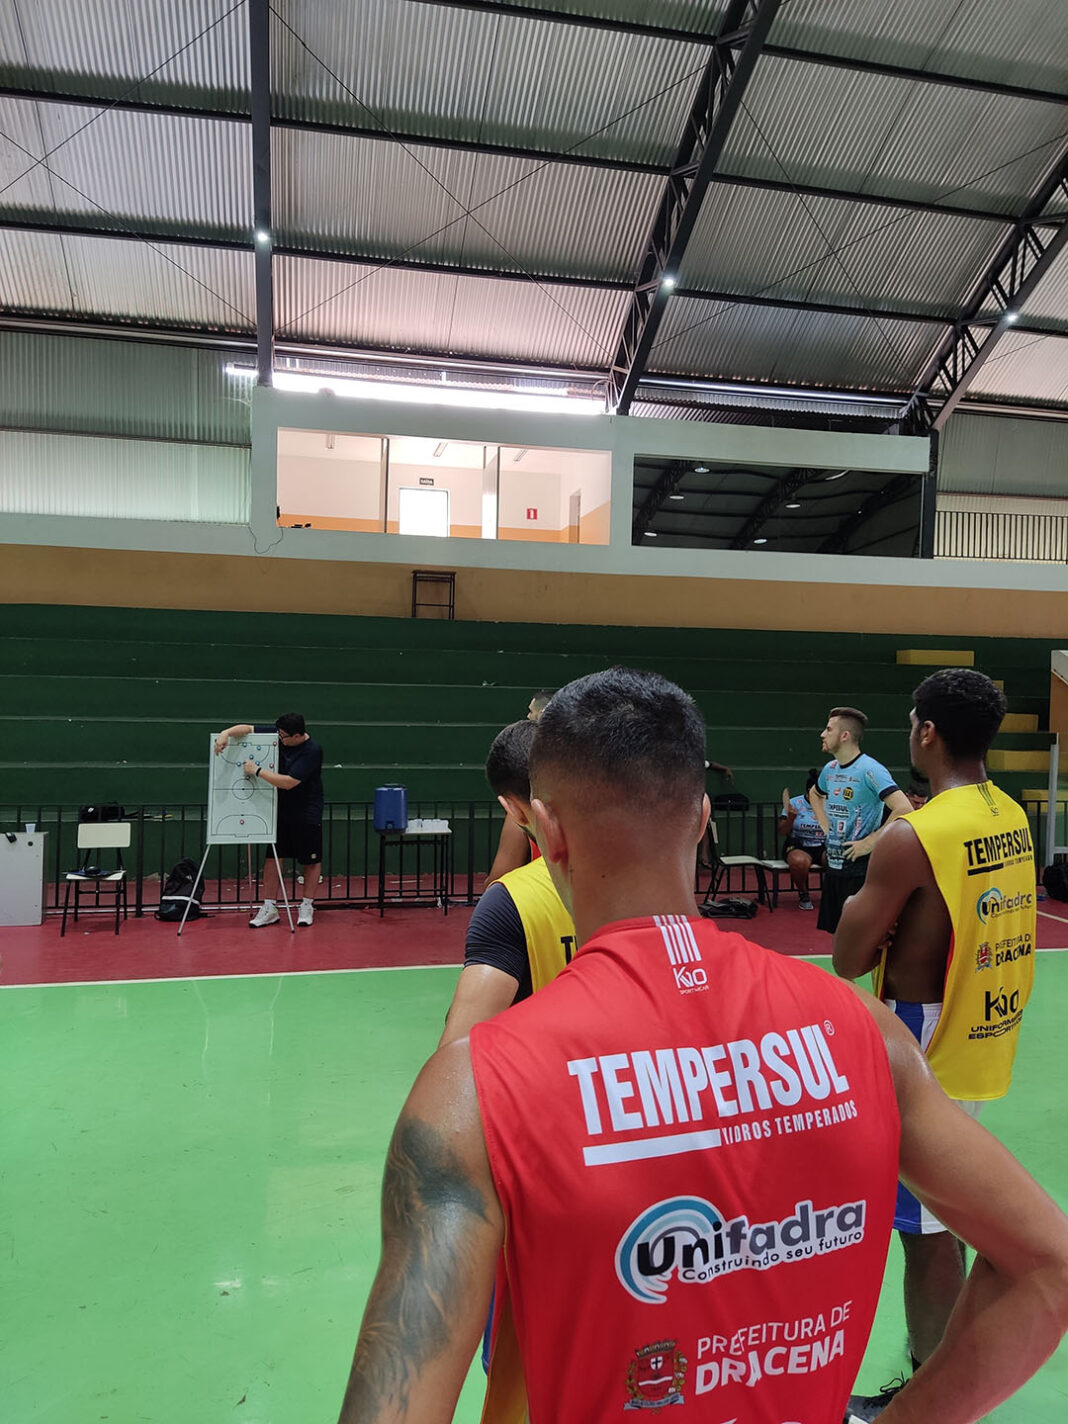 Cedida Dracena Tempersul Unifadra Futsal